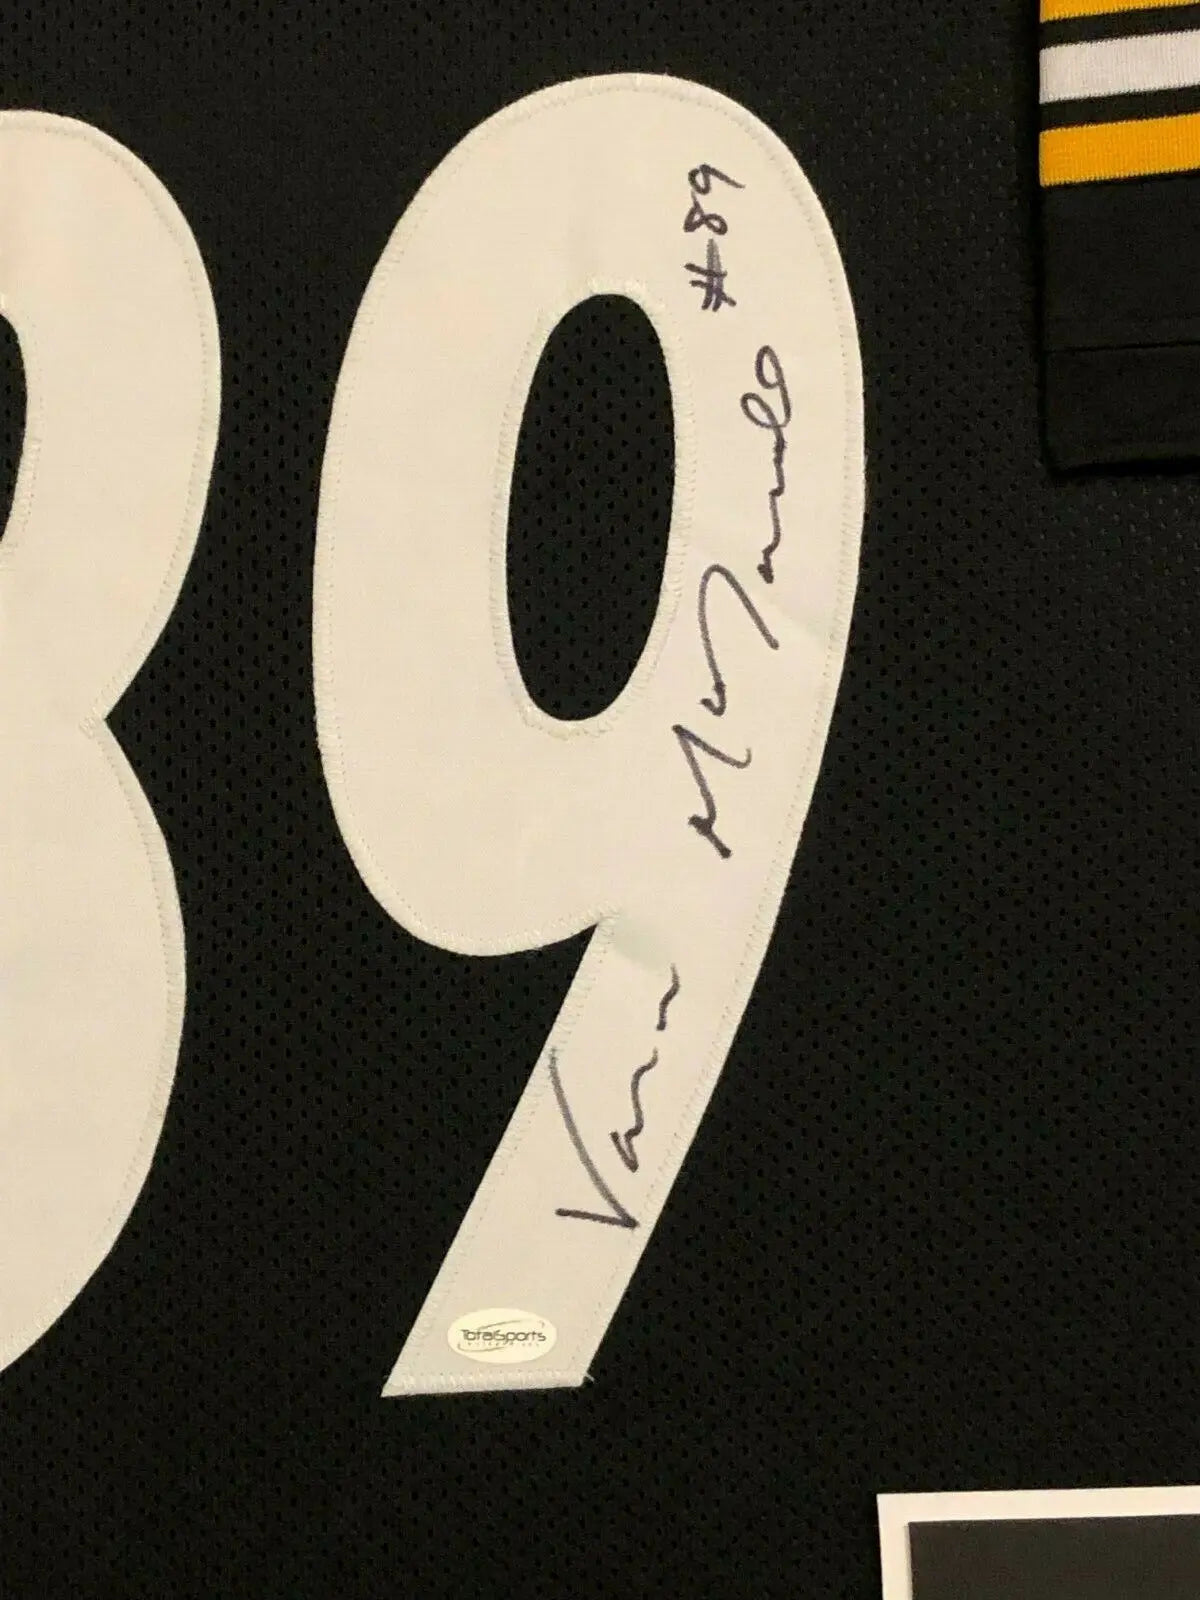 MVP Authentics Framed Pittsburgh Steelers Vance Mcdonald Autographed Signed Jersey Tse Coa 405 sports jersey framing , jersey framing